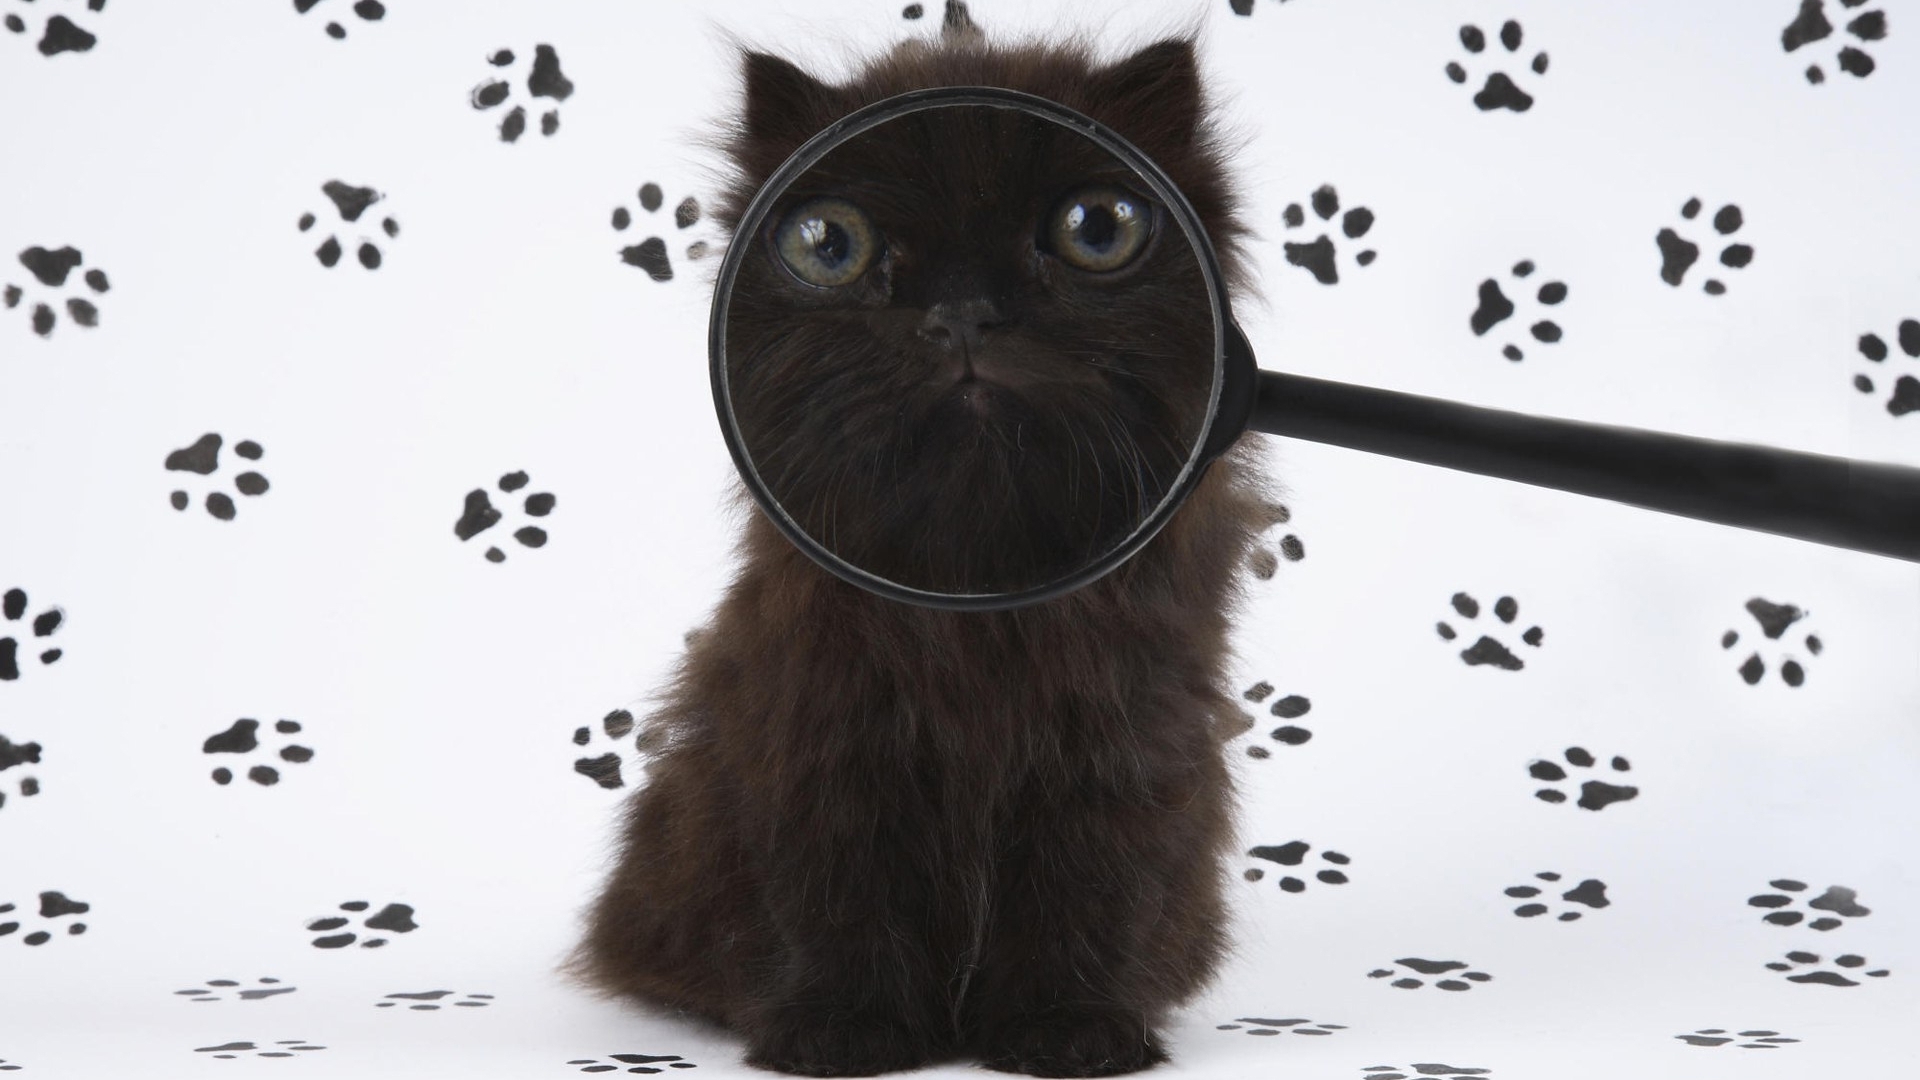 Картинка: Котёнок, чёрный, лупа, морда, глаза, лапы, следы, отпечатки, белый фон